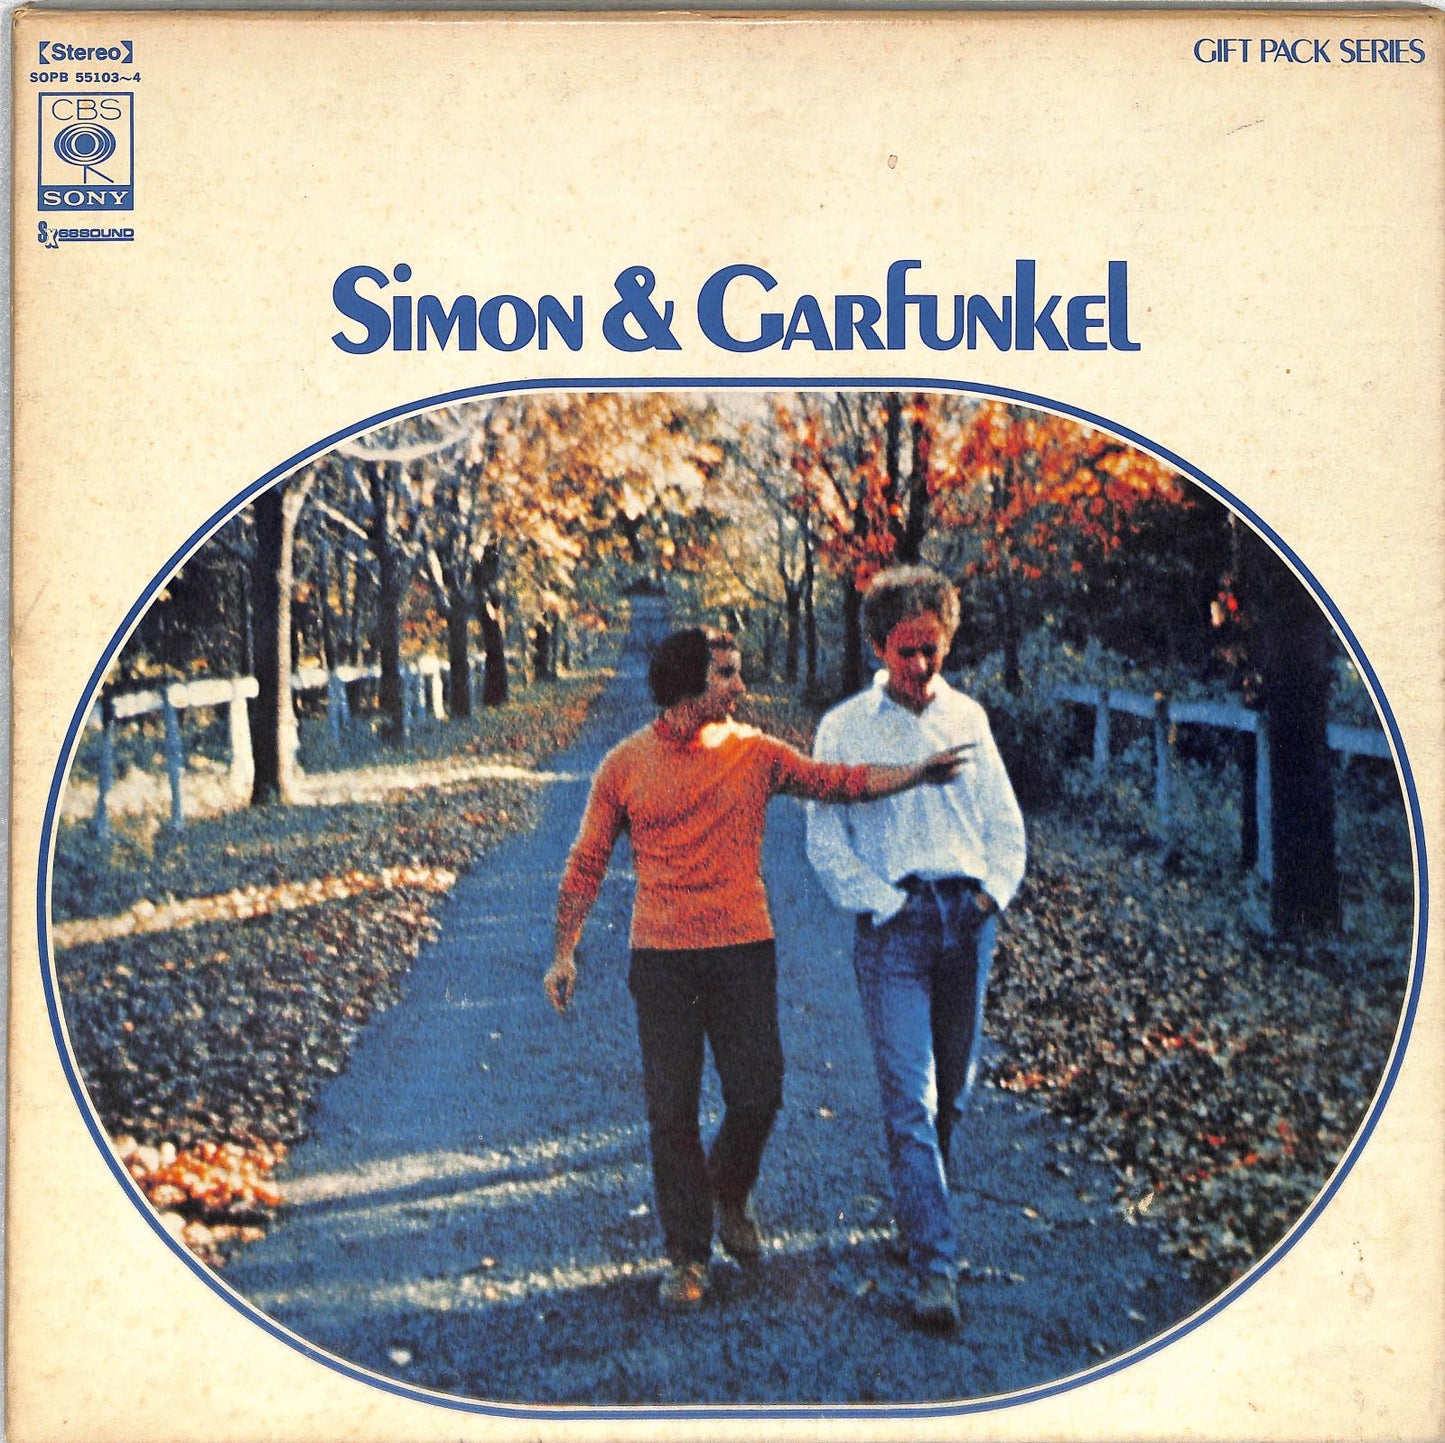 SIMON AND GARFUNKEL - Simon & Garfunkel